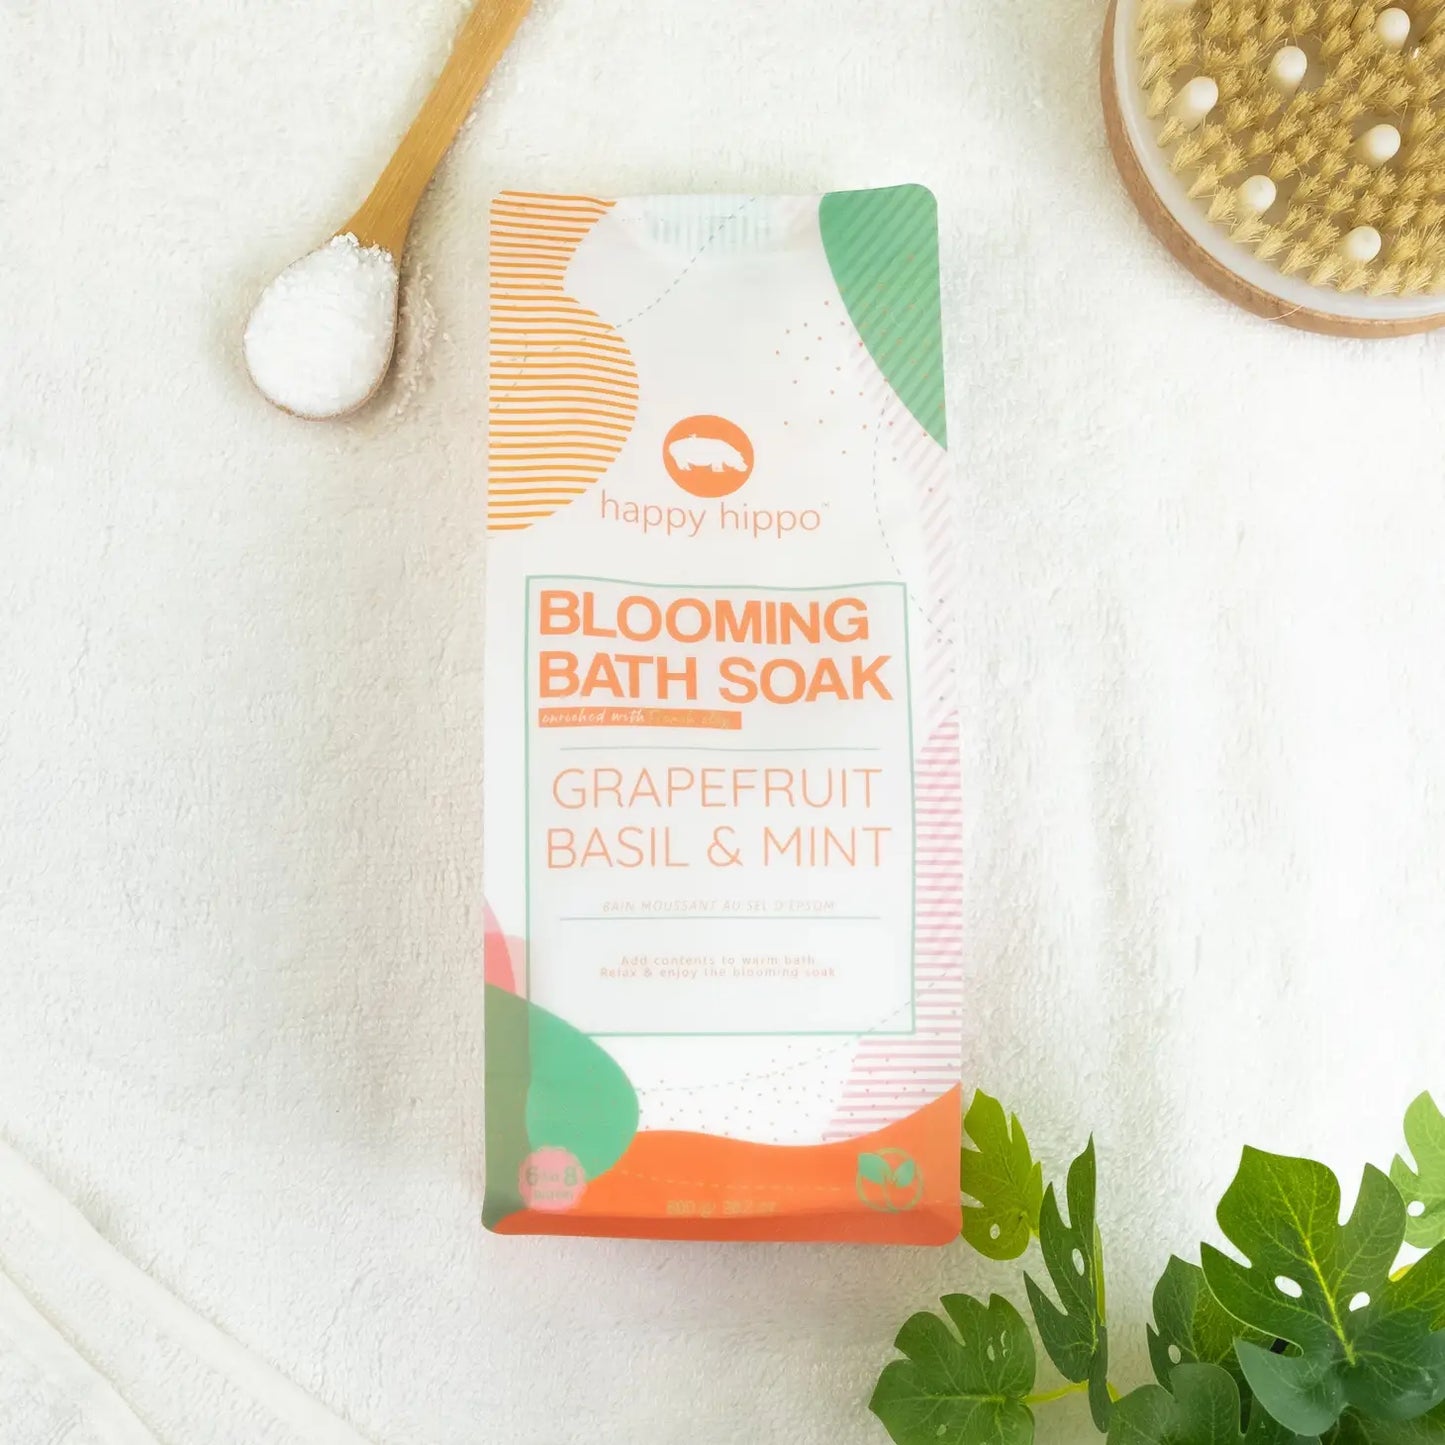 Grapefruit Basil & Mint-Blooming Bath Soak 800g